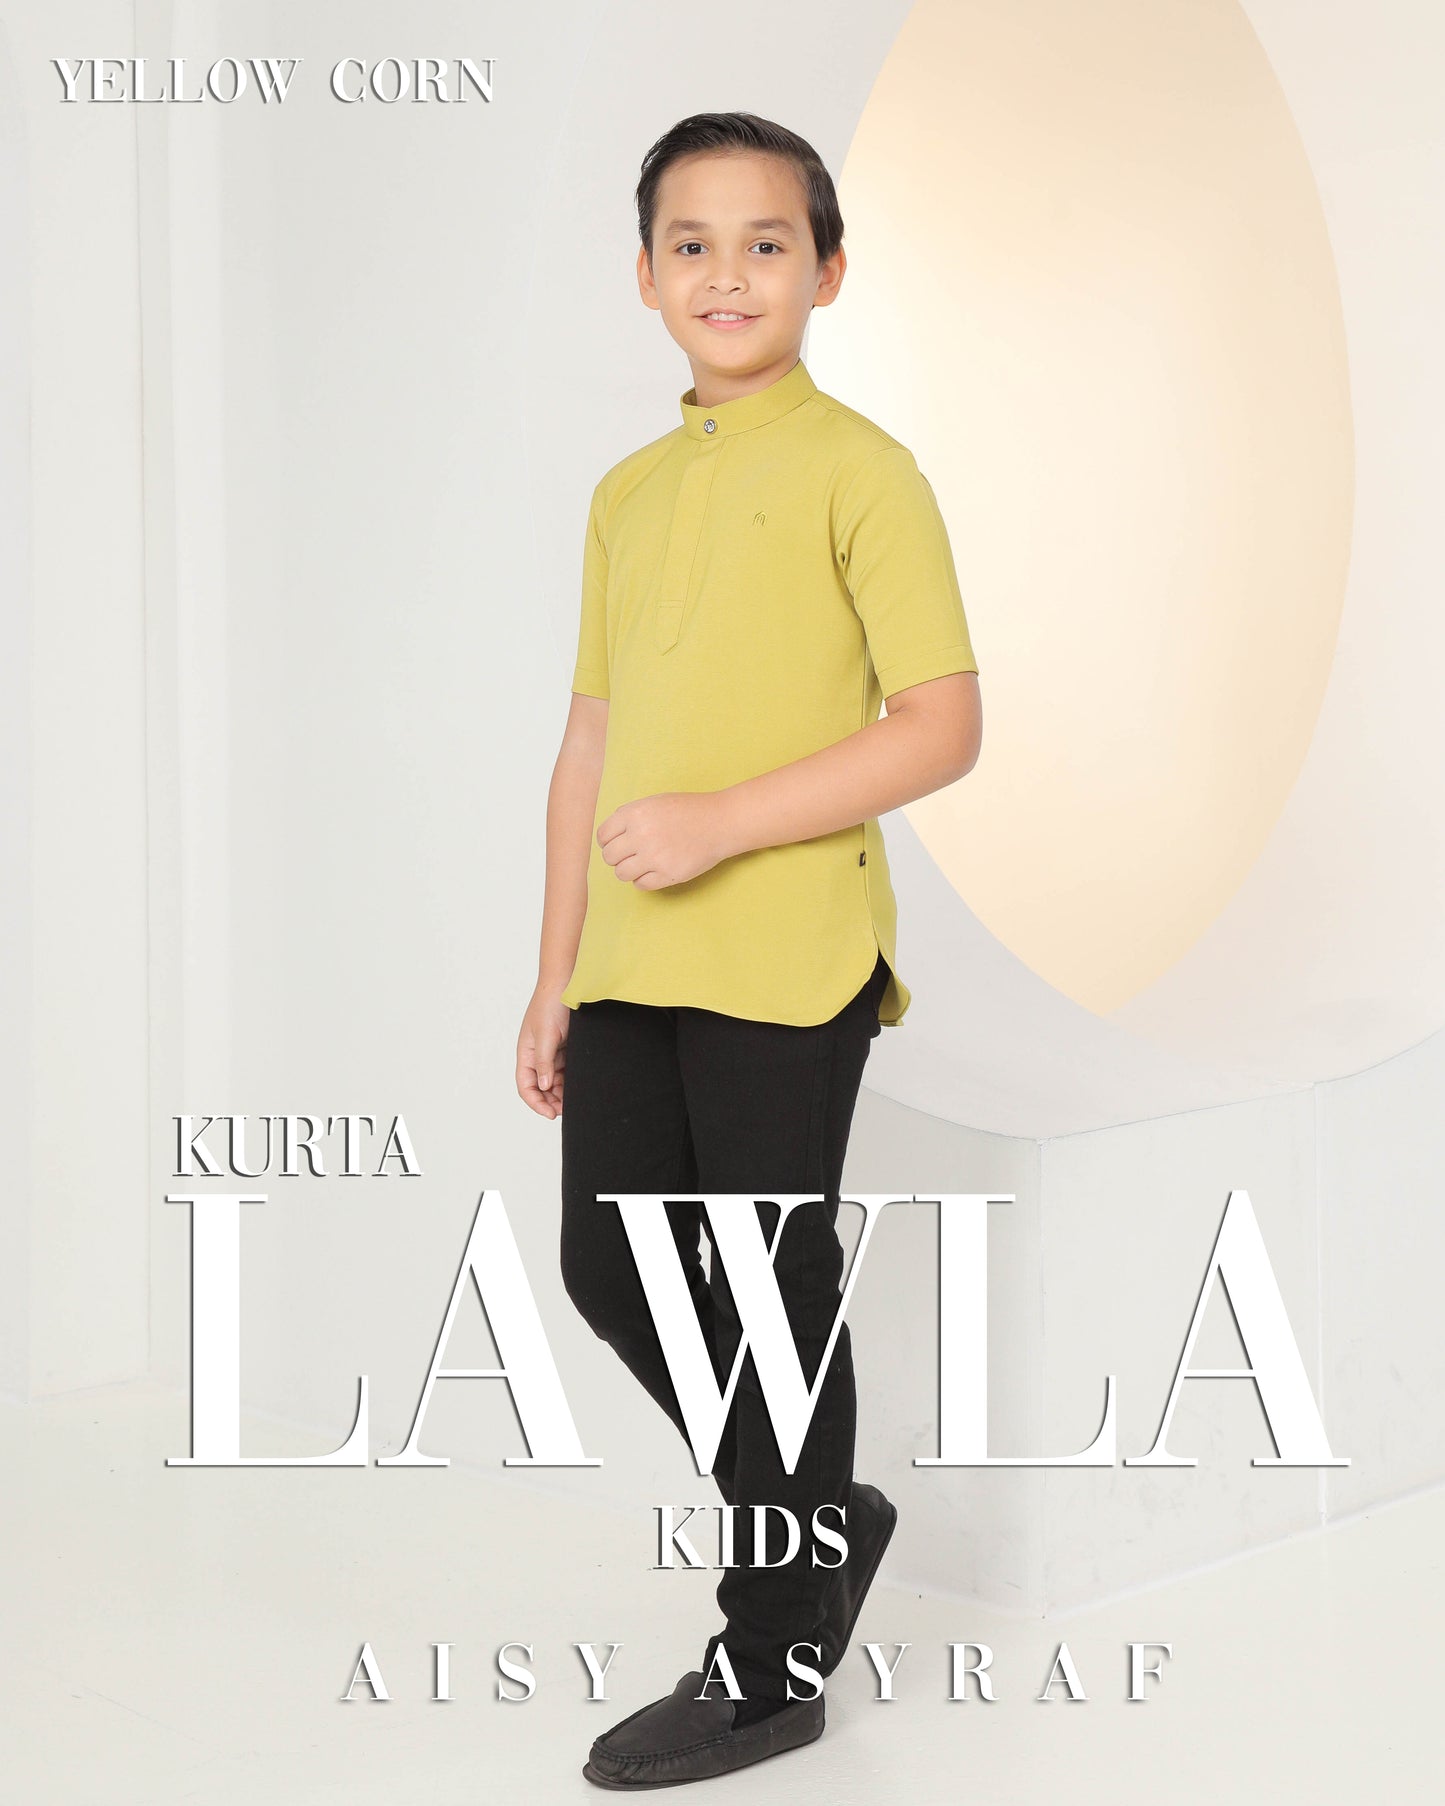 Kurta Lawla Kids - Yellow Corn